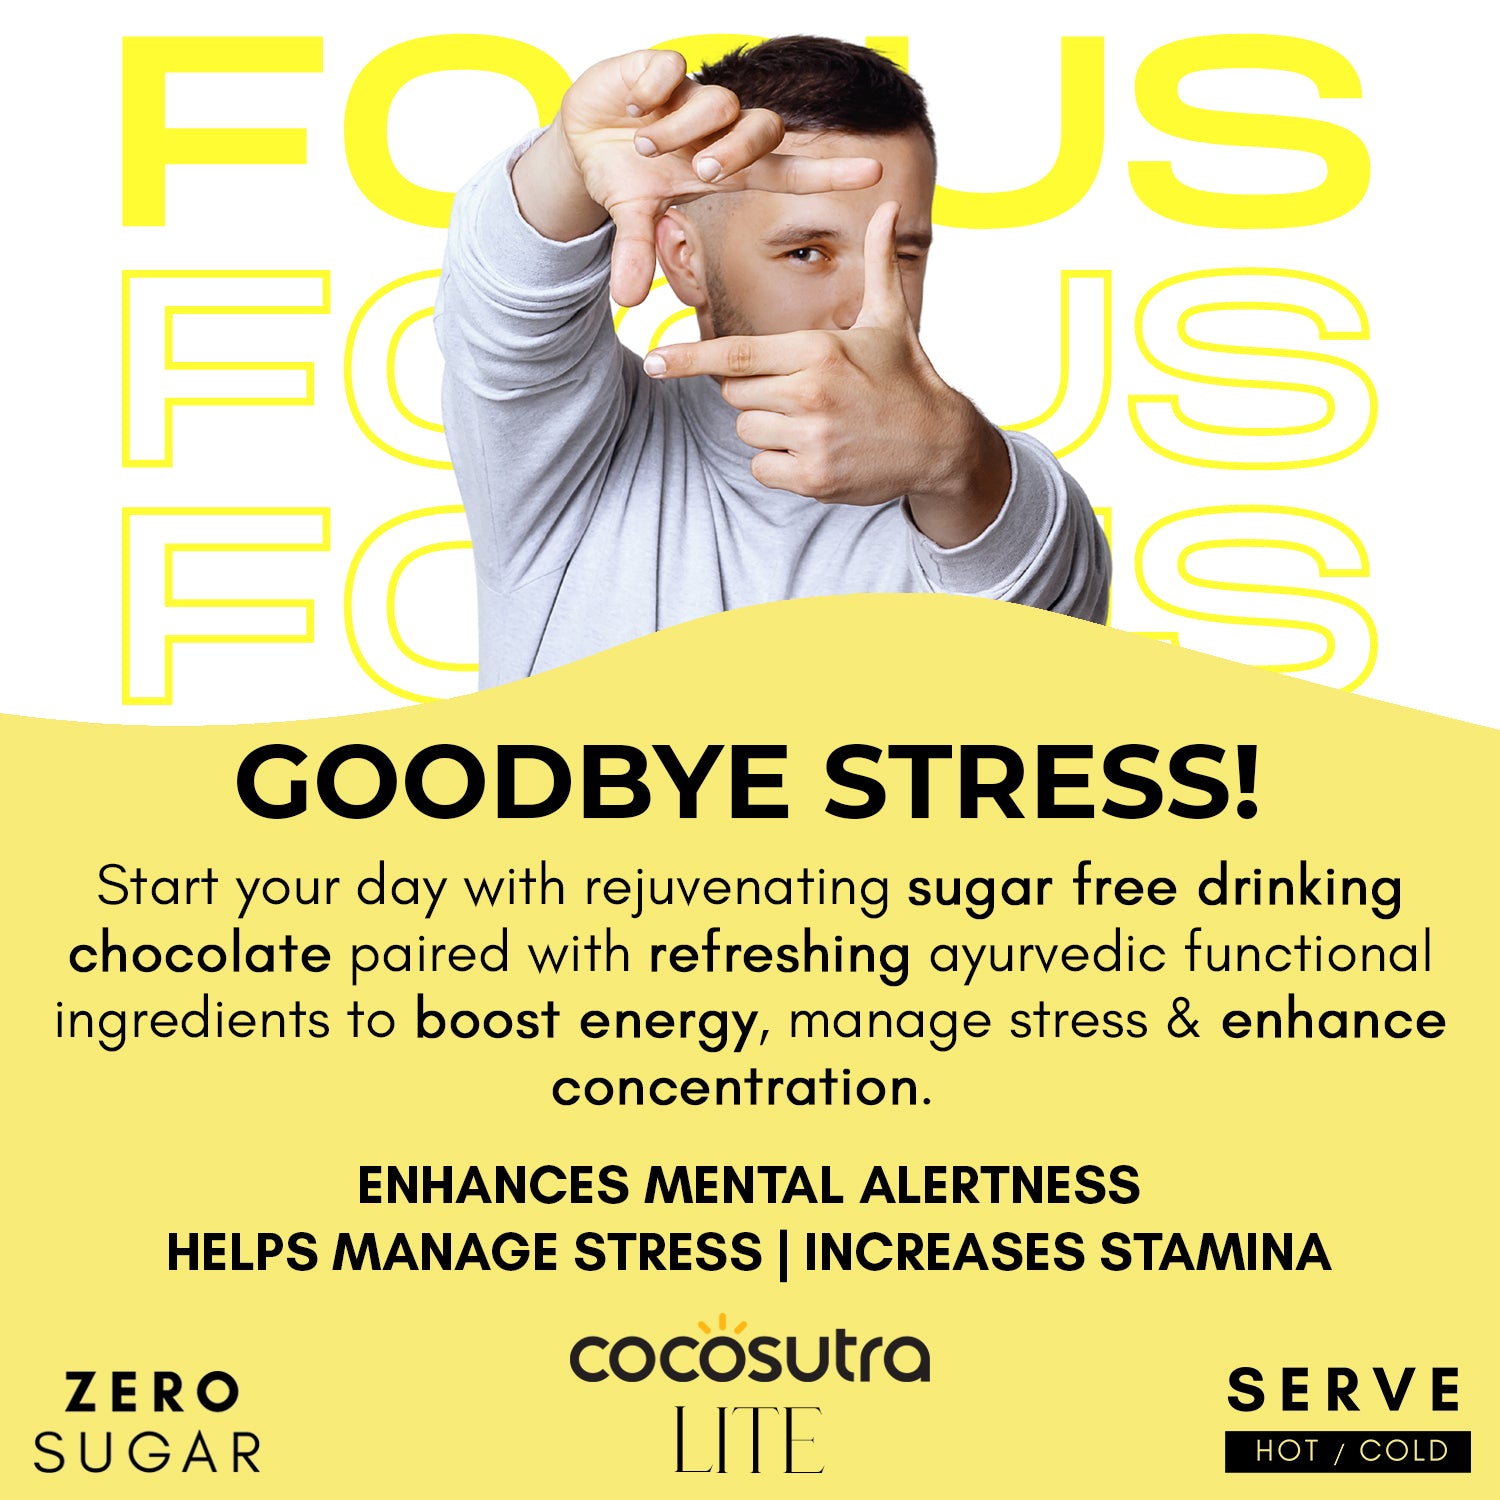 Cocosutra Focus - Sugar Free Drinking Chocolate Mix - Ashwagandha & Brahmi based Energy Supplement - Benefits